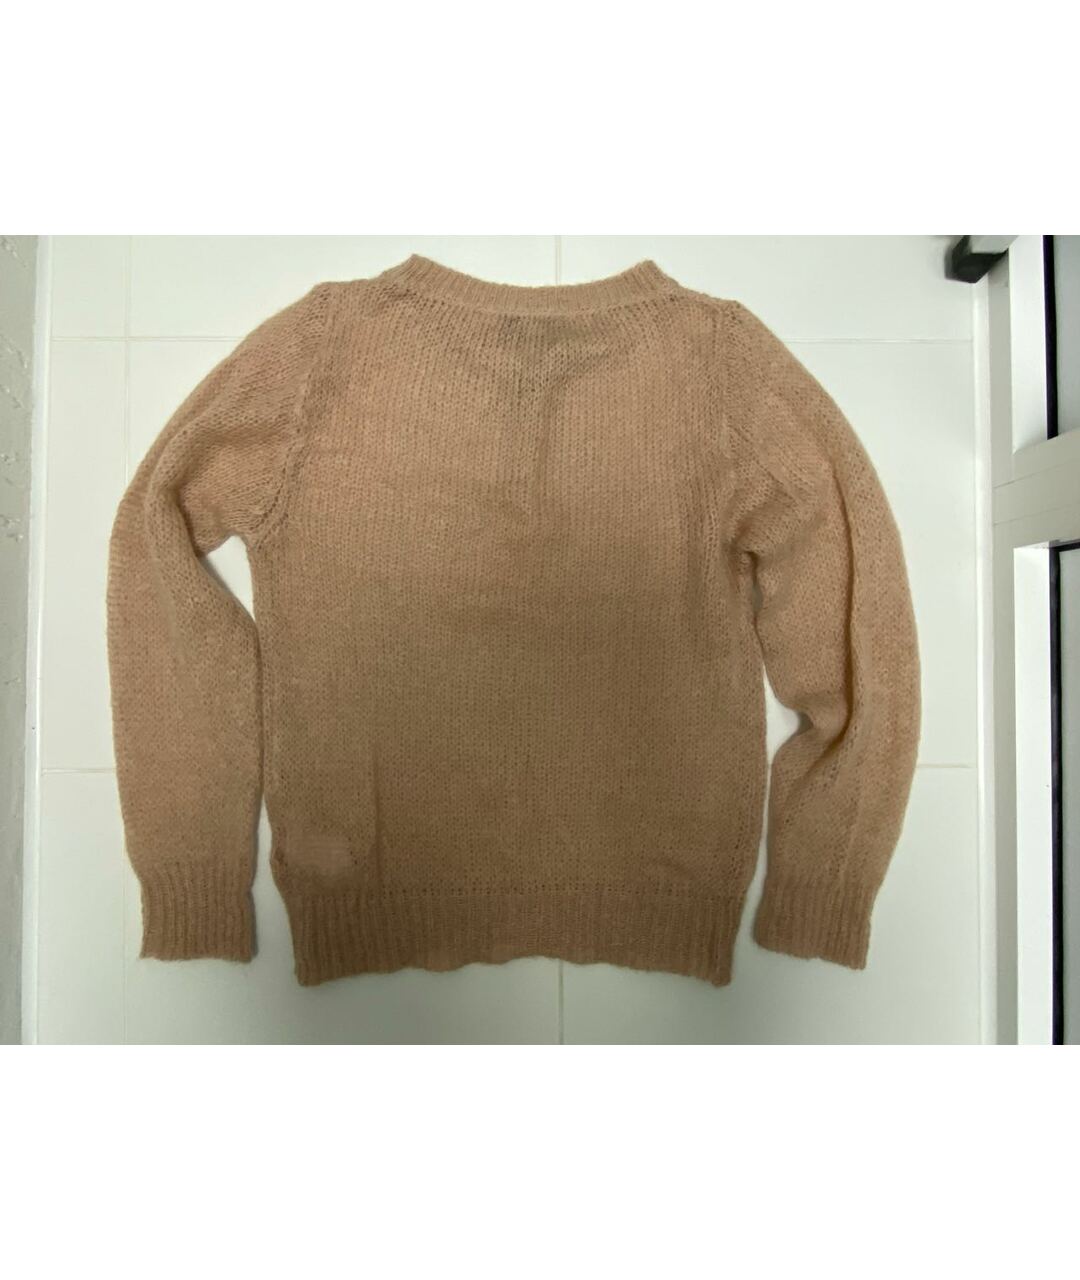 KI6 Бежевый шерстяной джемпер / свитер, фото 2